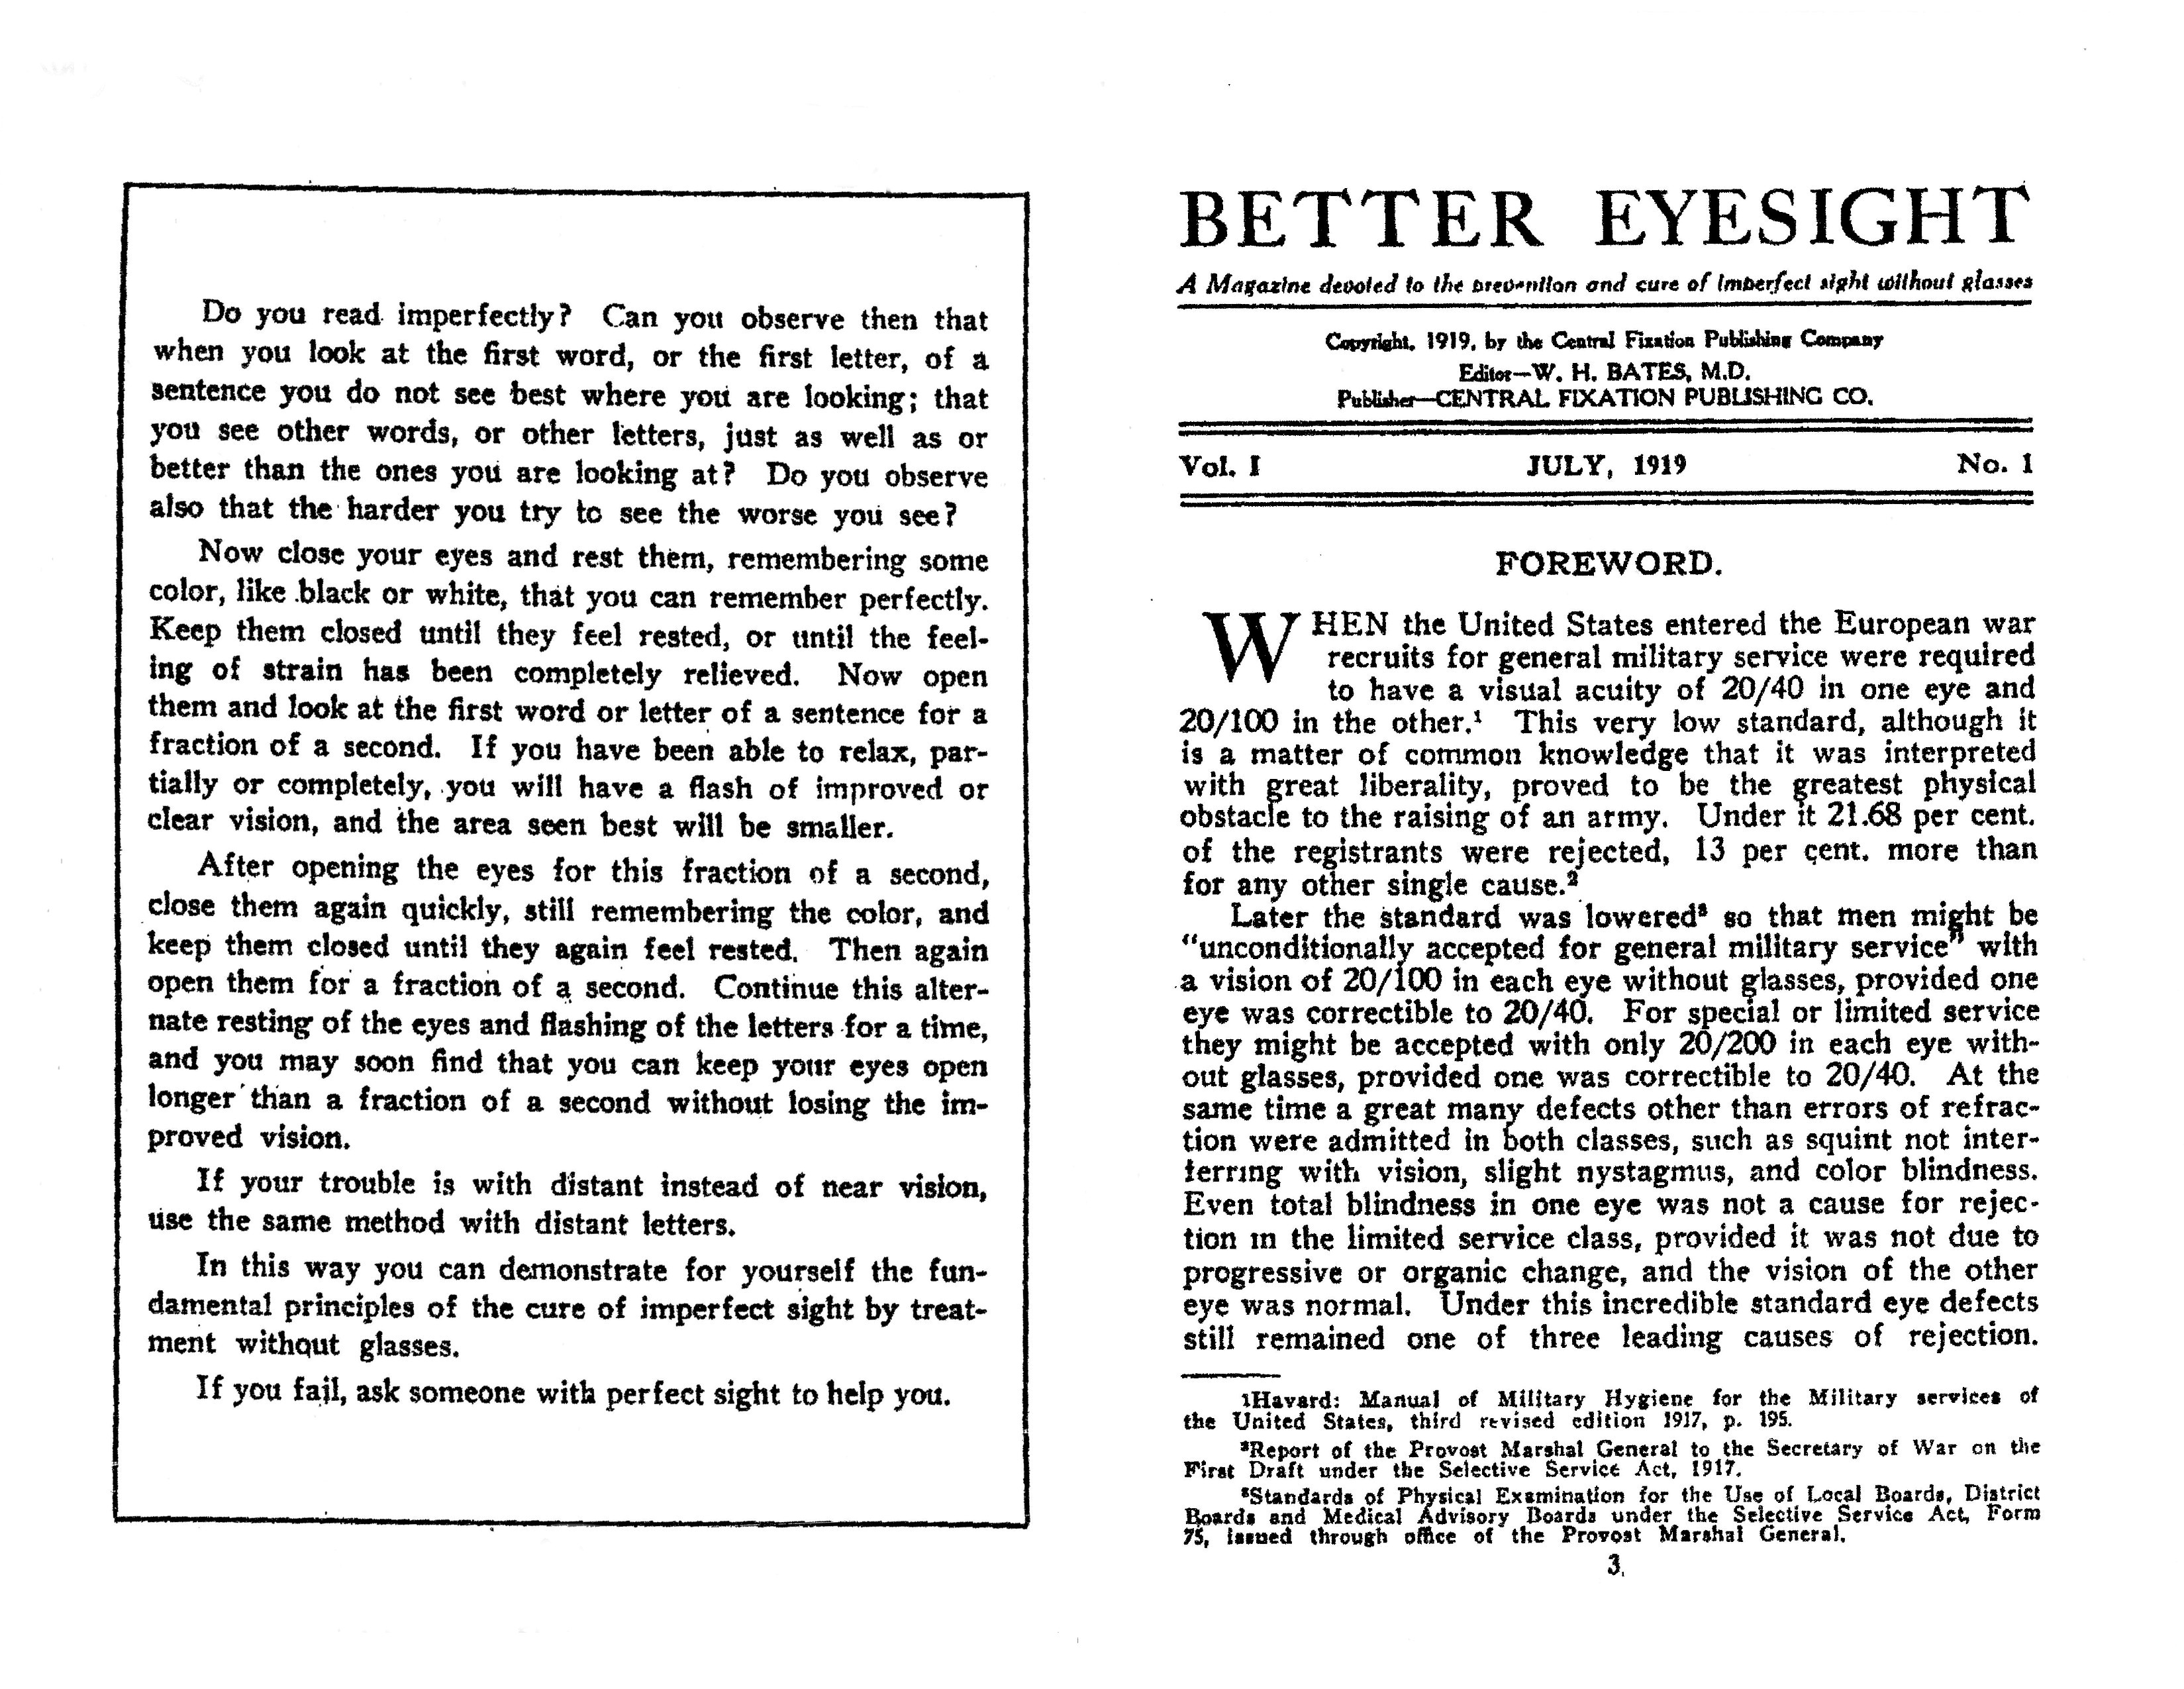 Better Eyesight Magazine Original Pages